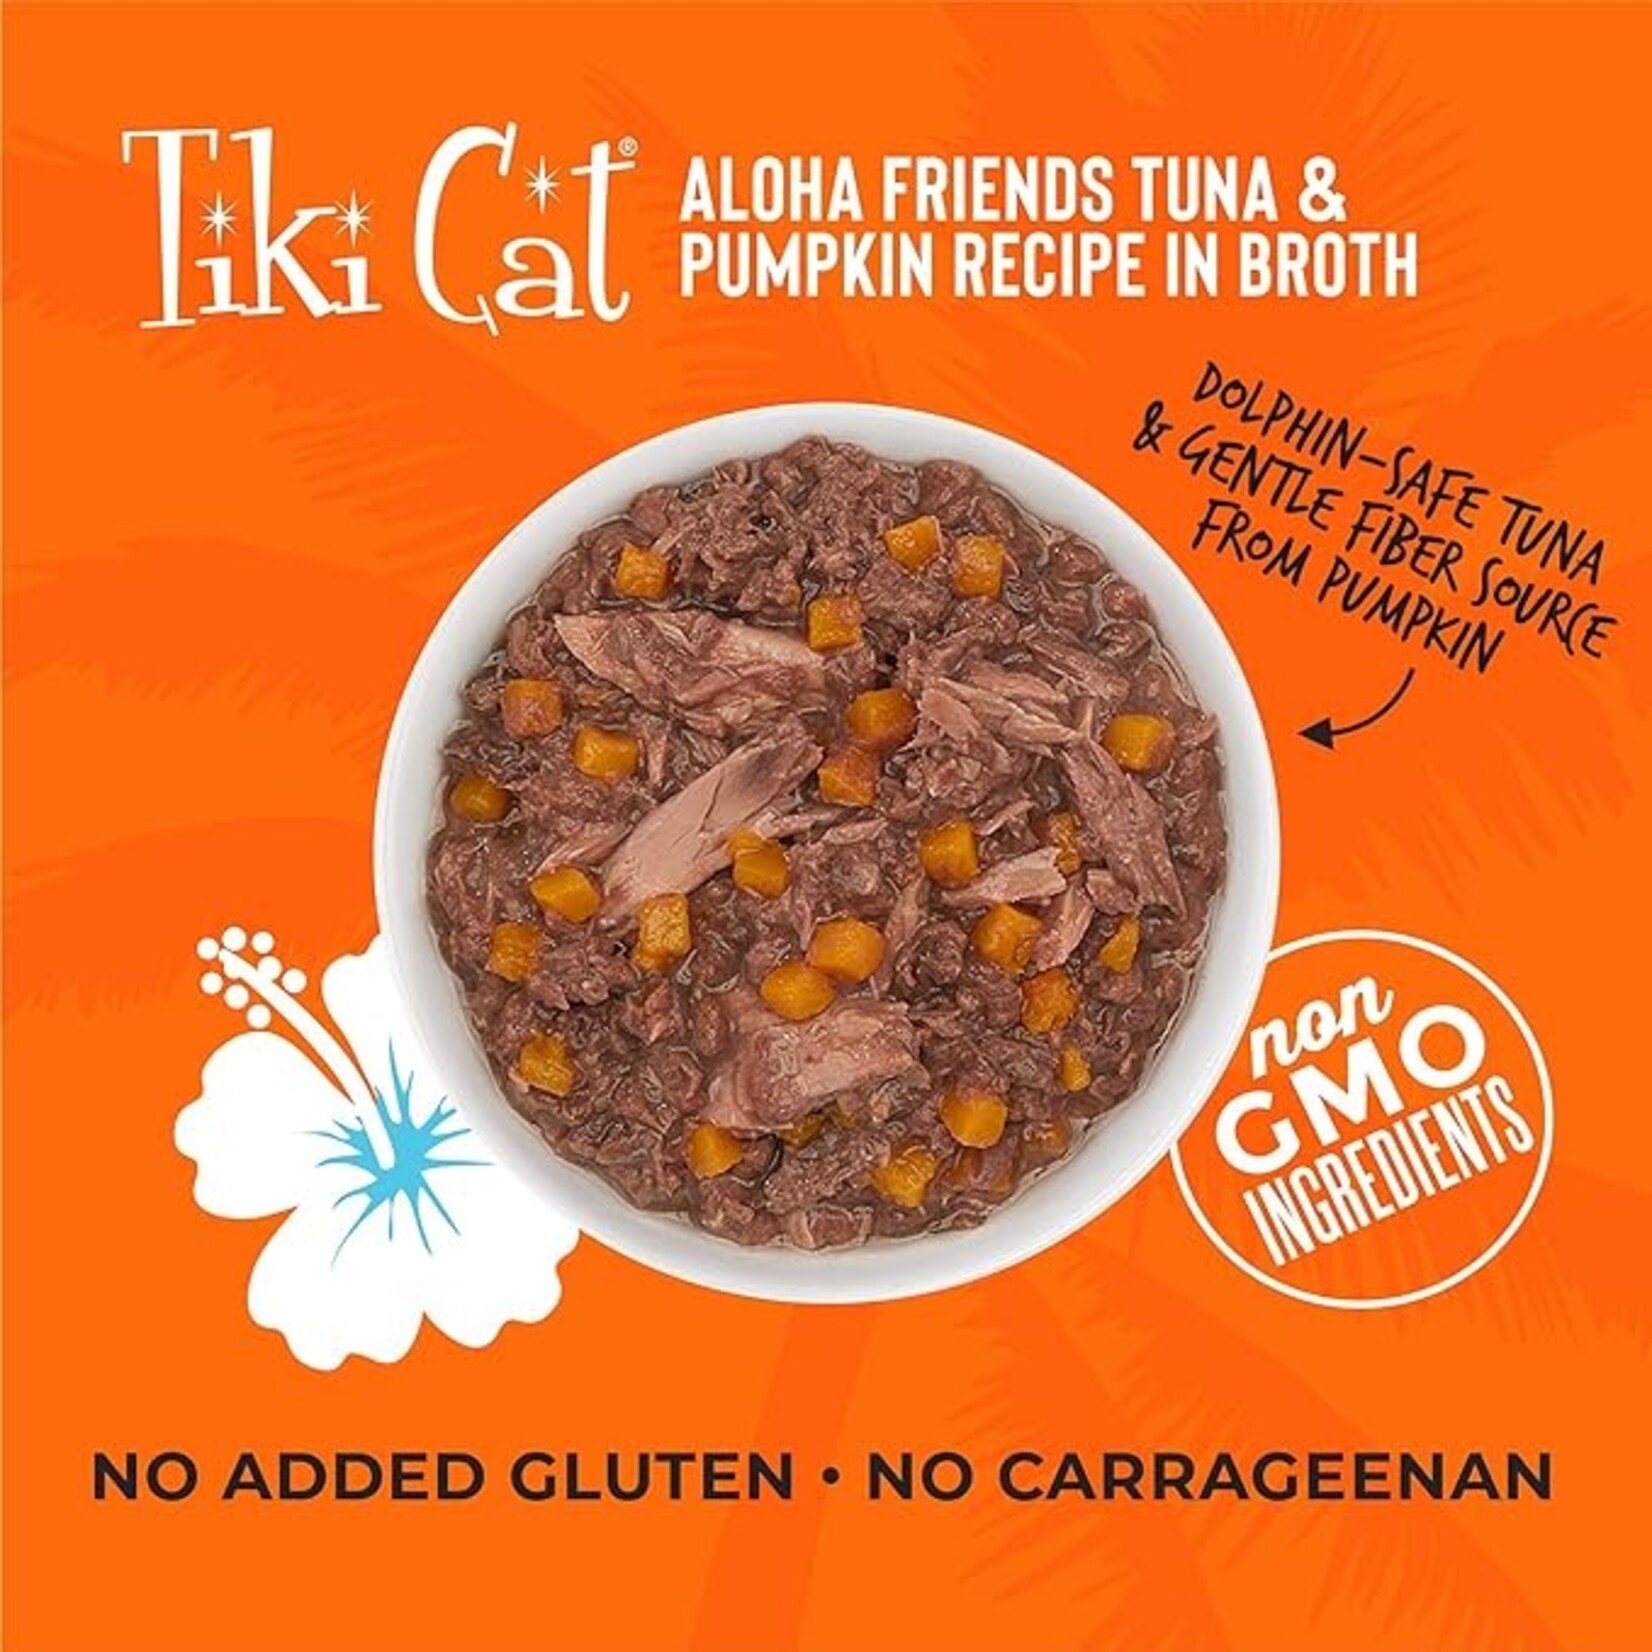 Tiki Cat TIki Cat Aloha Tuna & Pumpkin 3oz